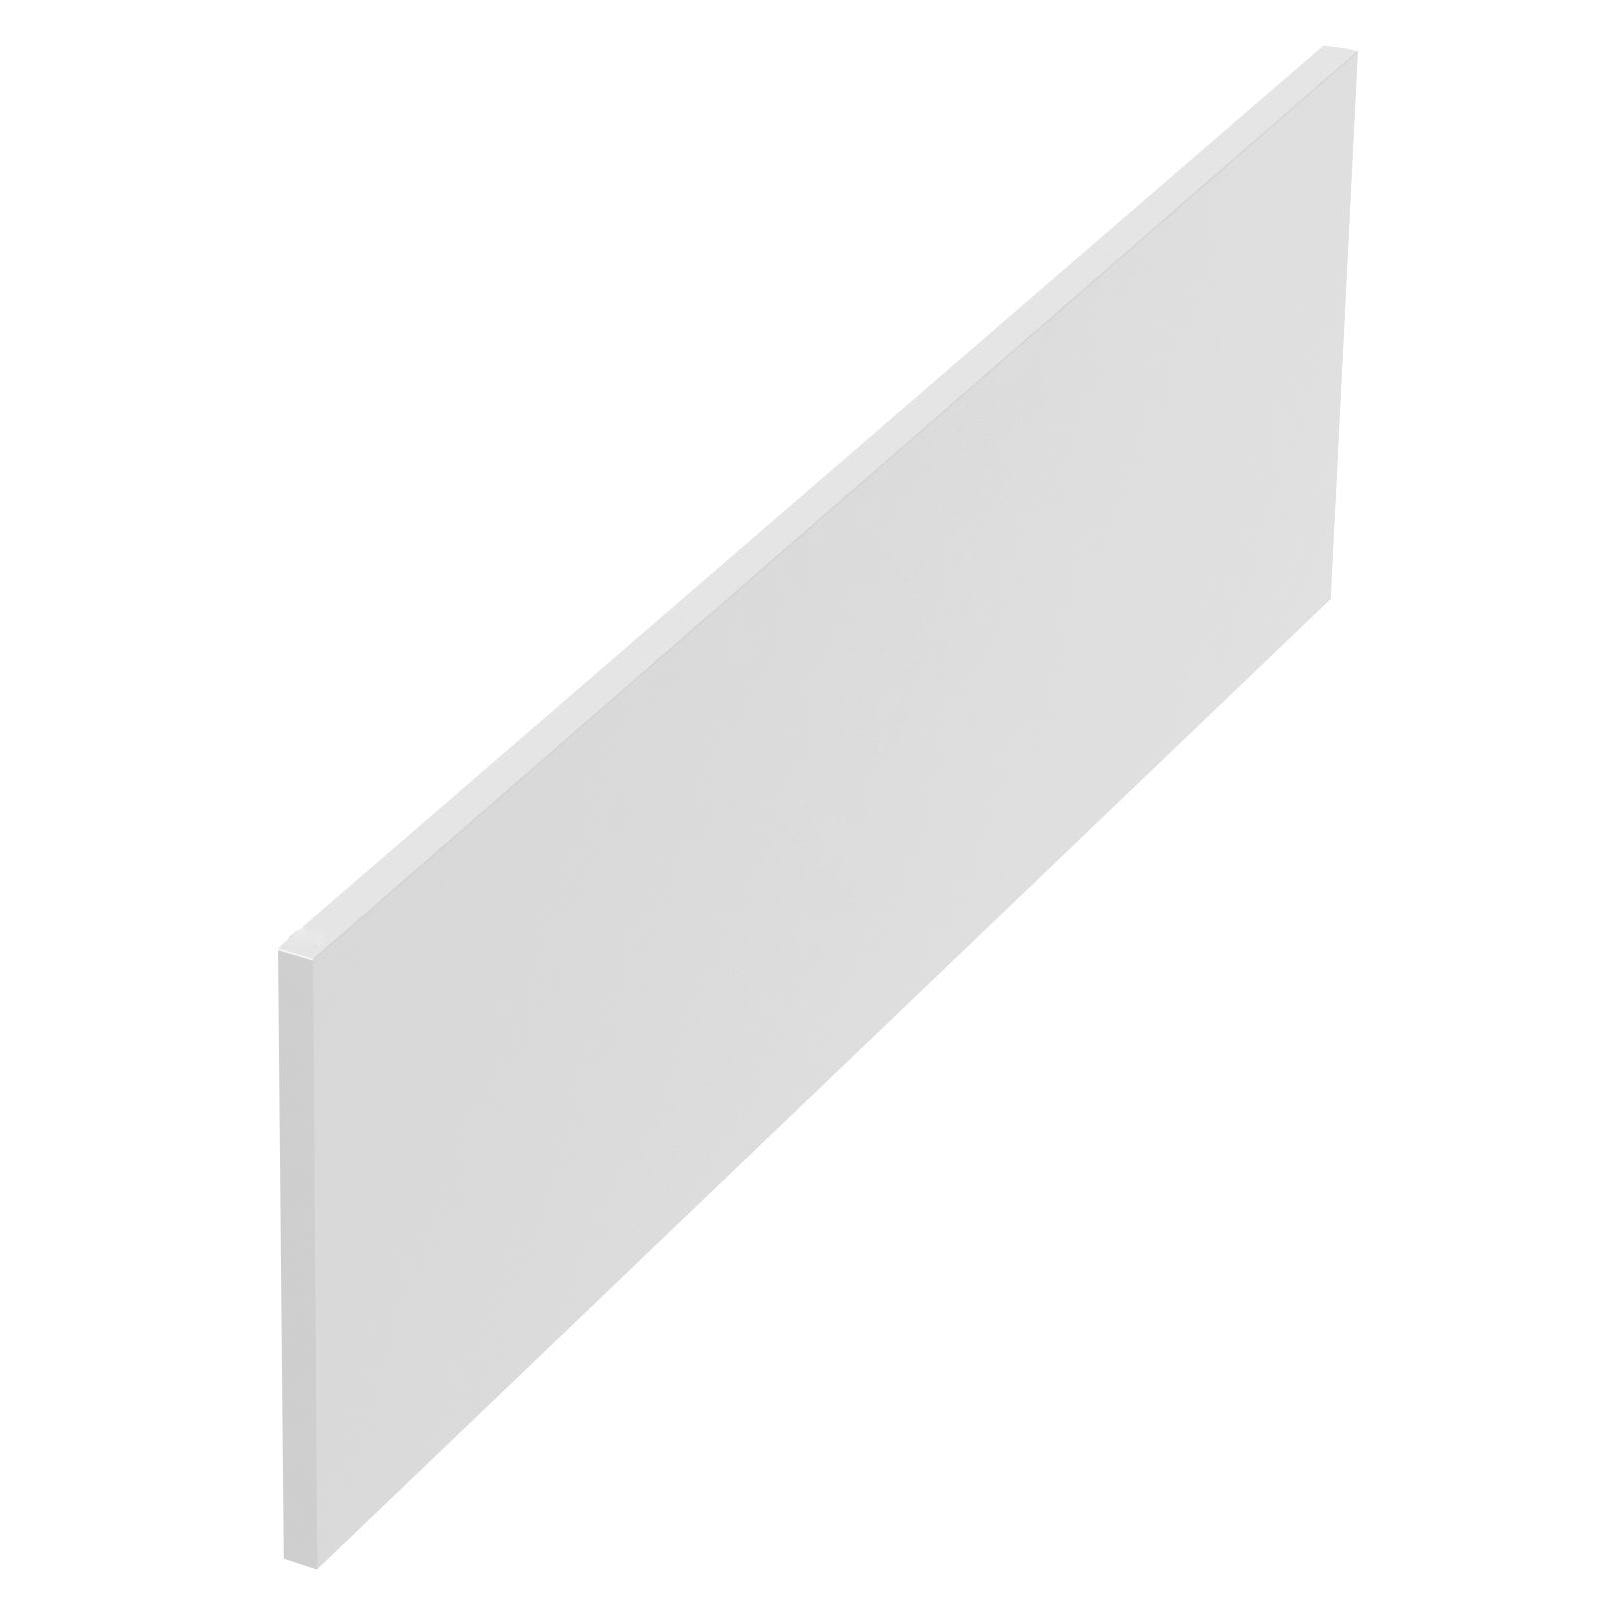 Tablier frontal FIX ALU blanc fixation aimantée - Habillage frontal 180 x 52-53,5 cm 0